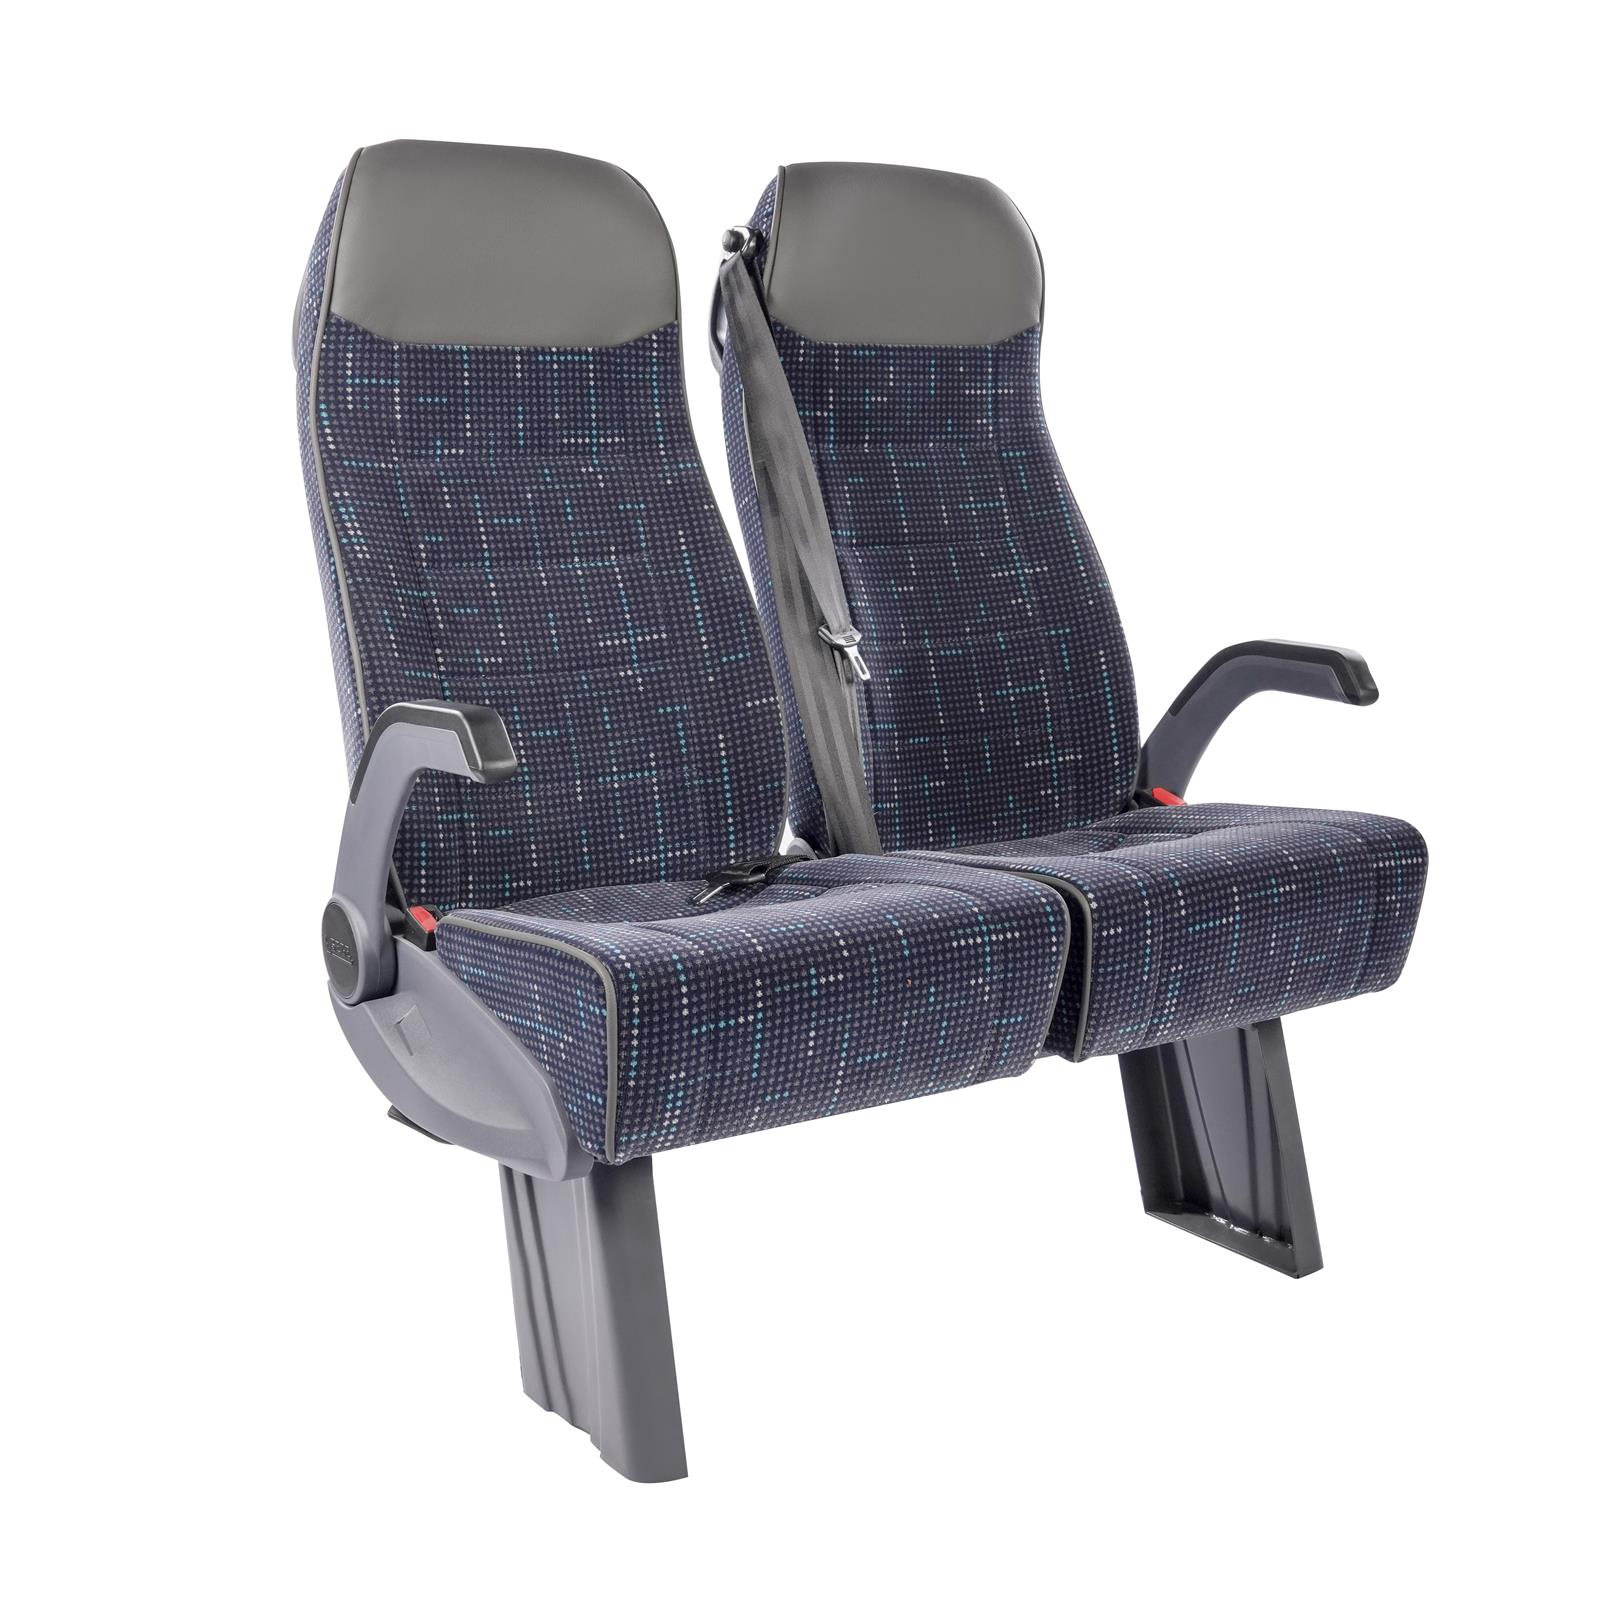 image shows the sege passenger 4030x bus seat